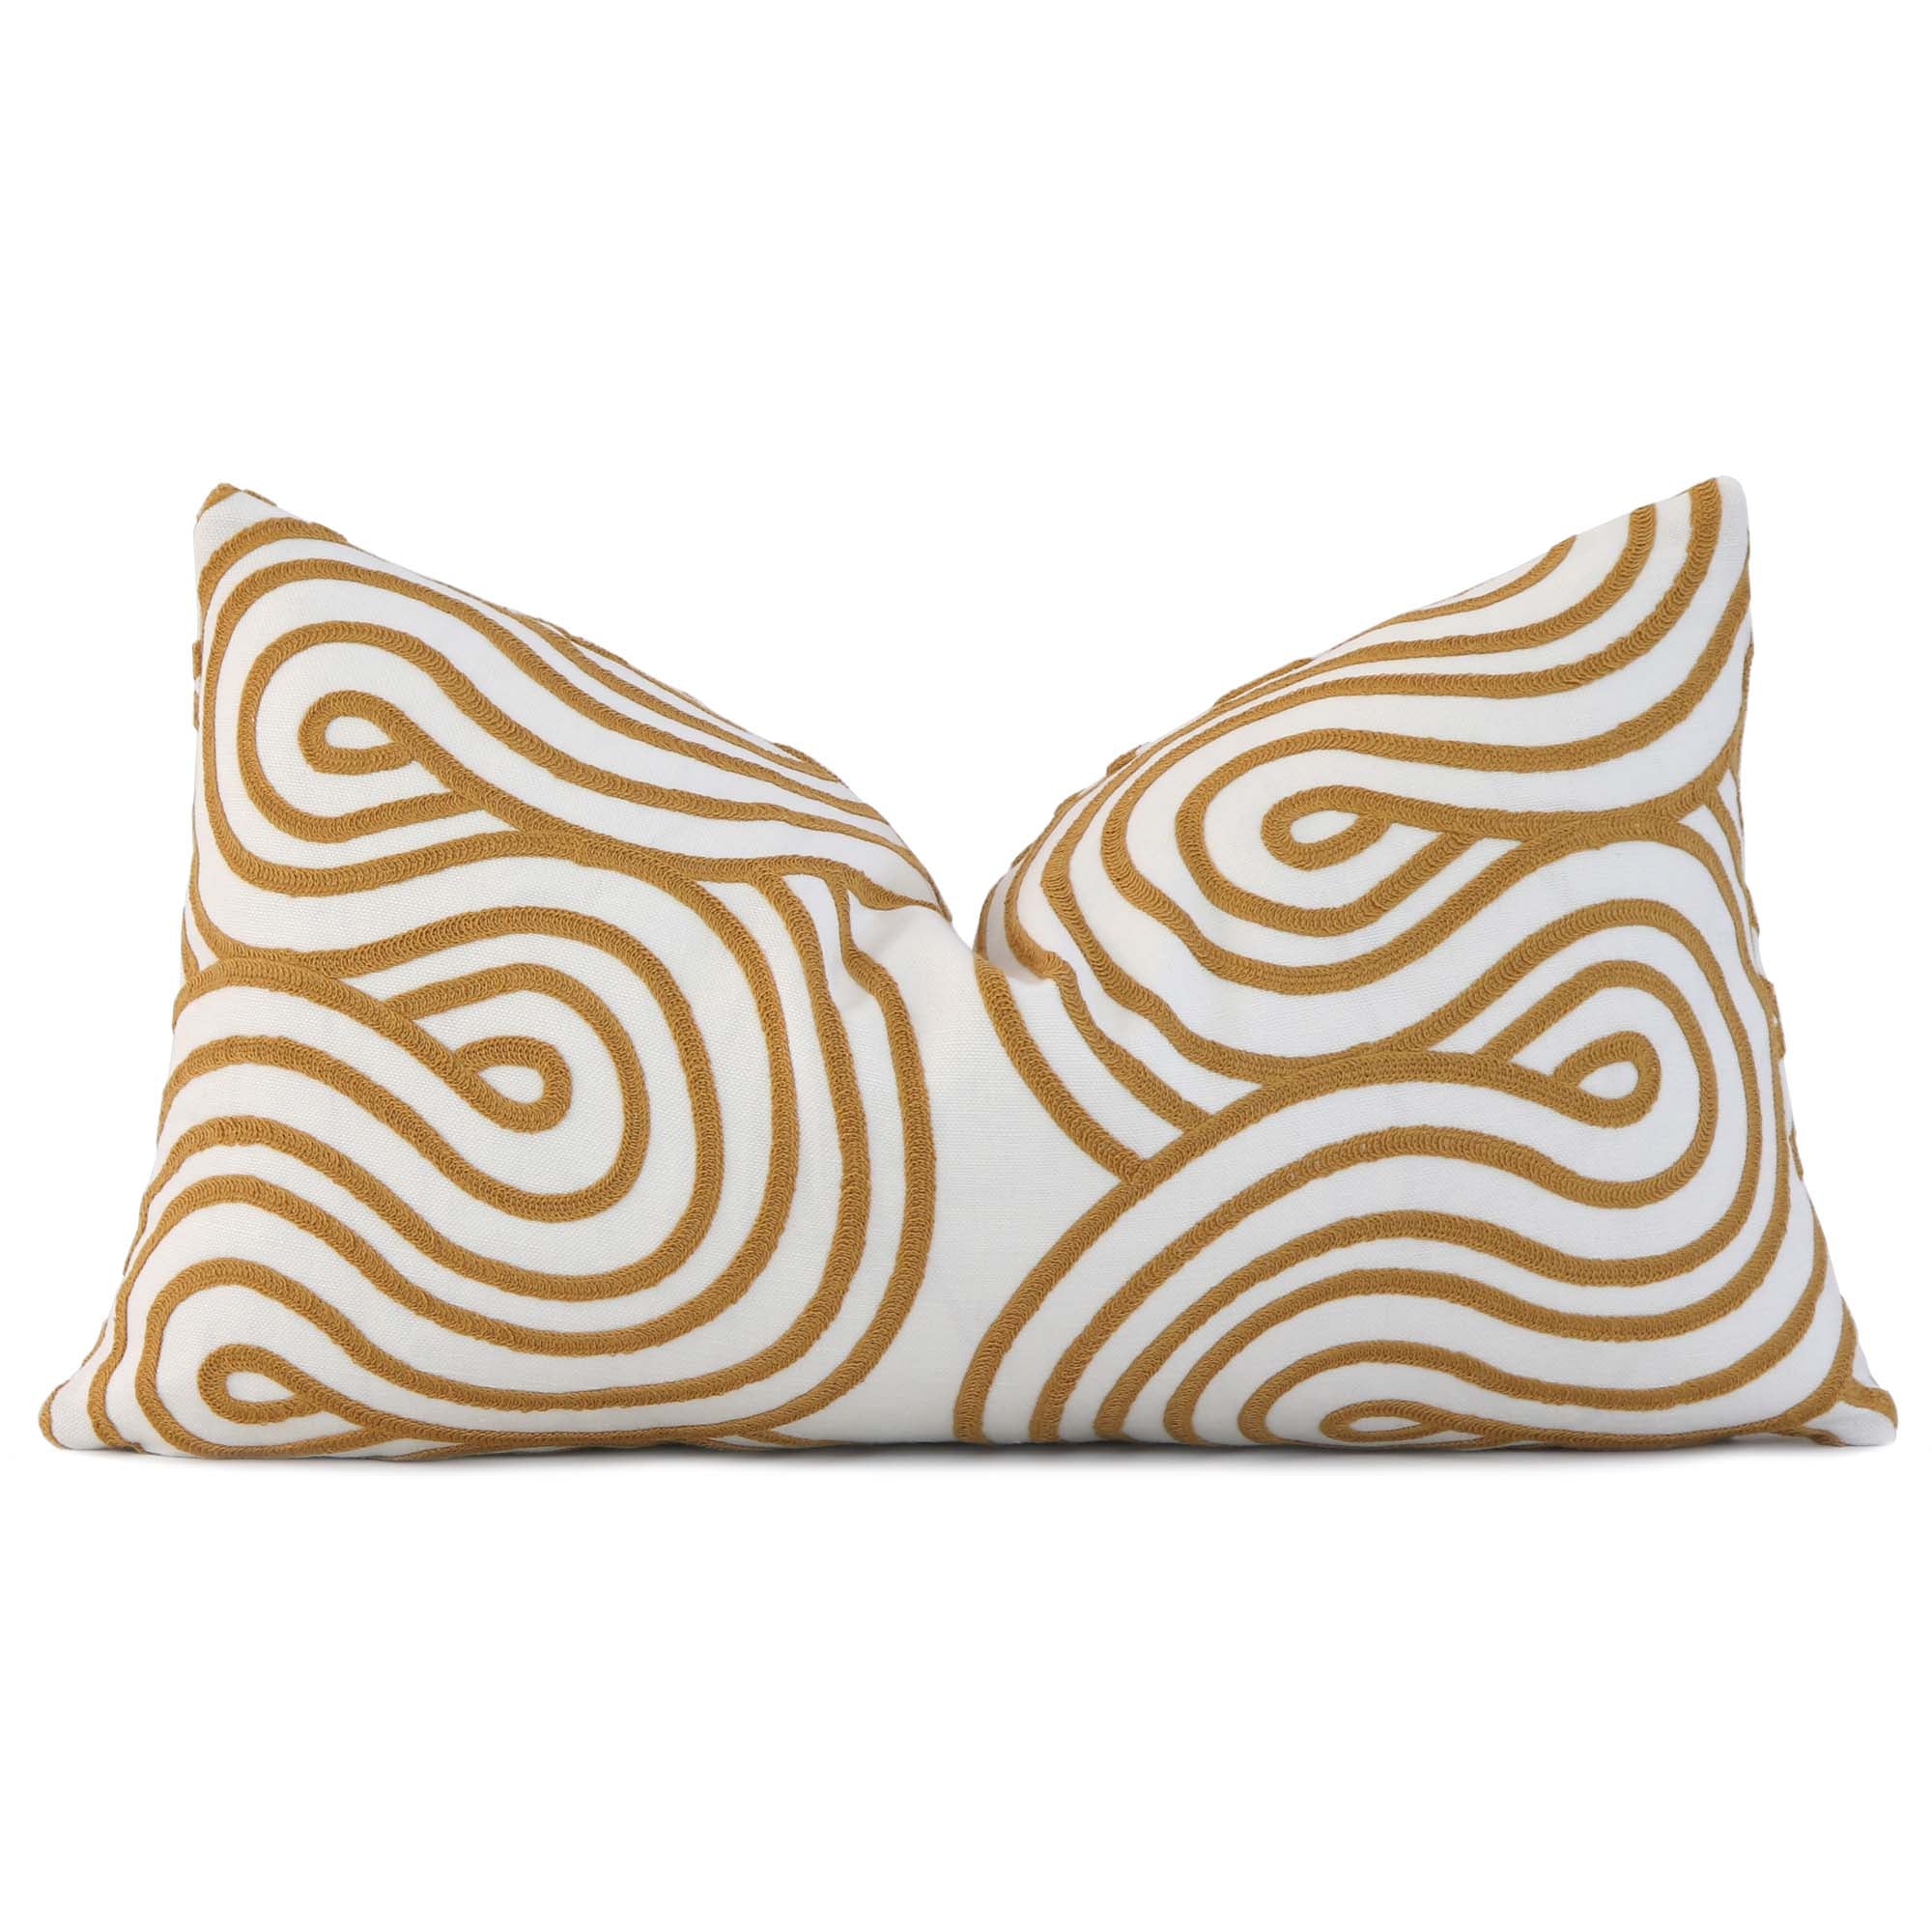 Schumacher Giraldi Embroidery Gold Yellow Luxury Designer Lumbar Throw Pillow Cover